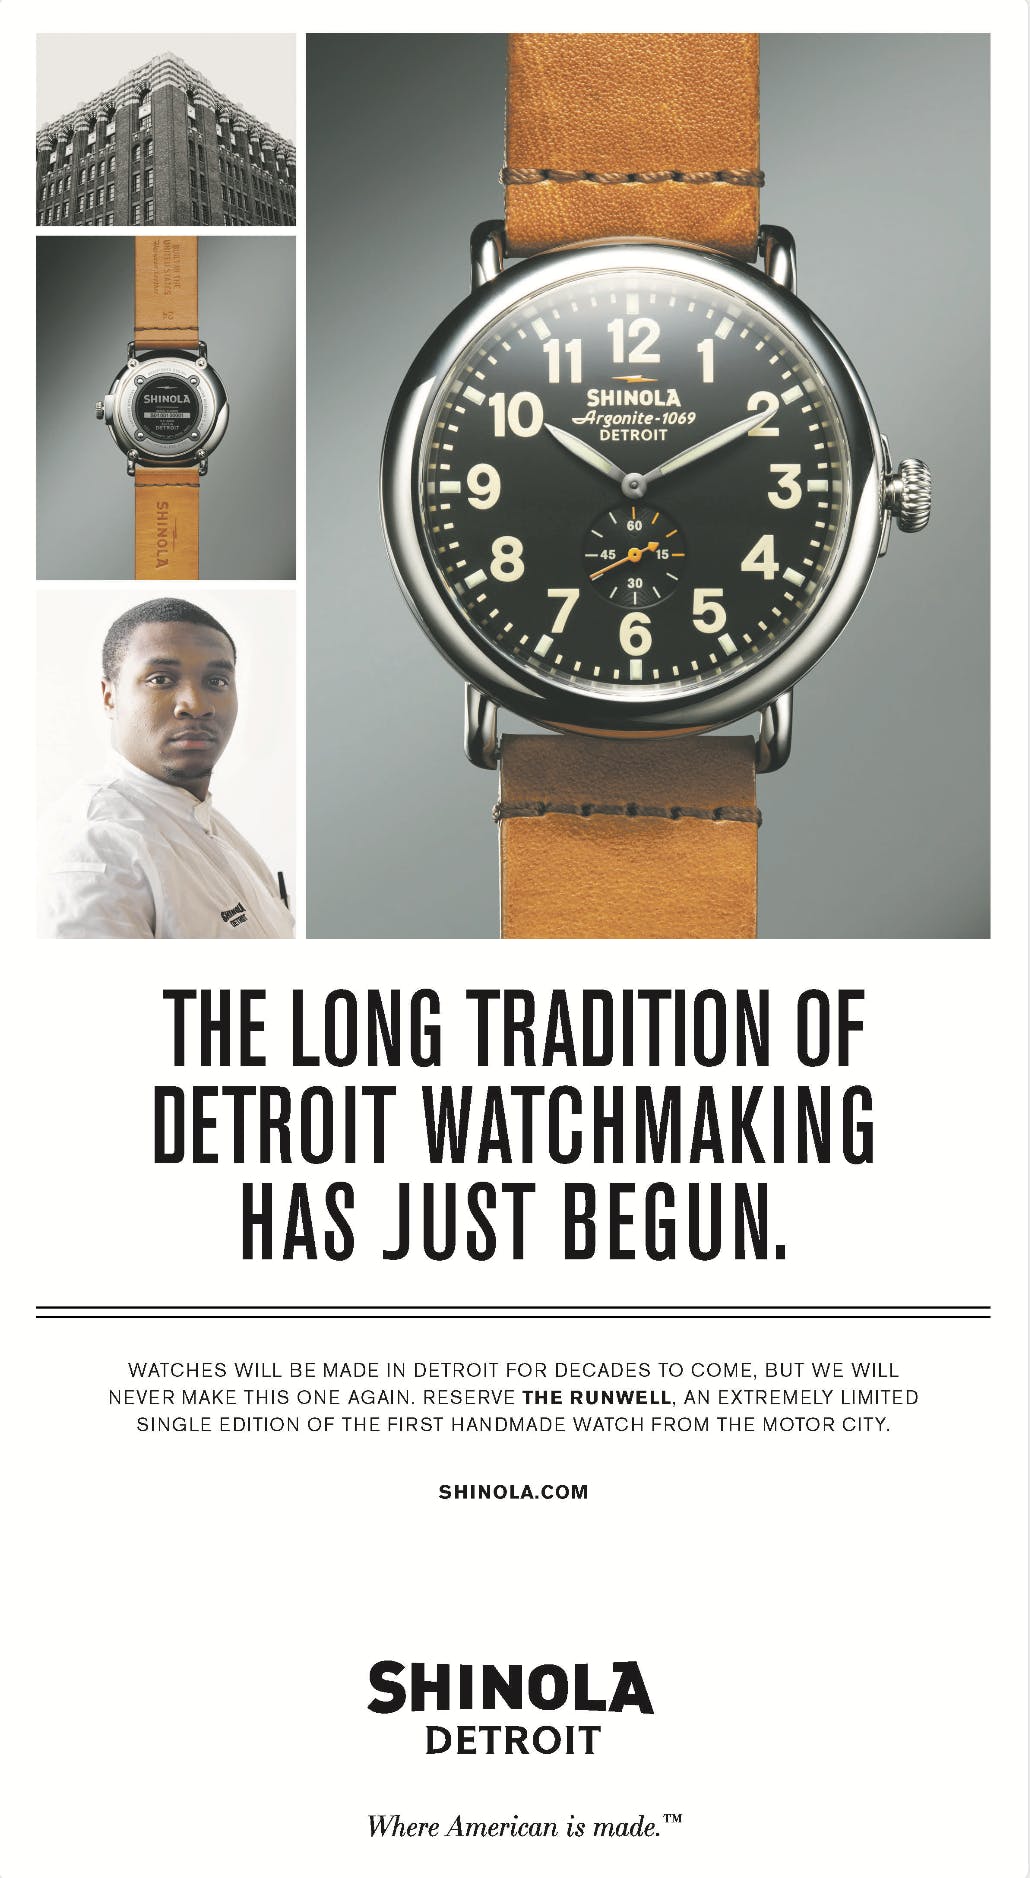 Detroit Watch Company M1-Woodward Chronograph